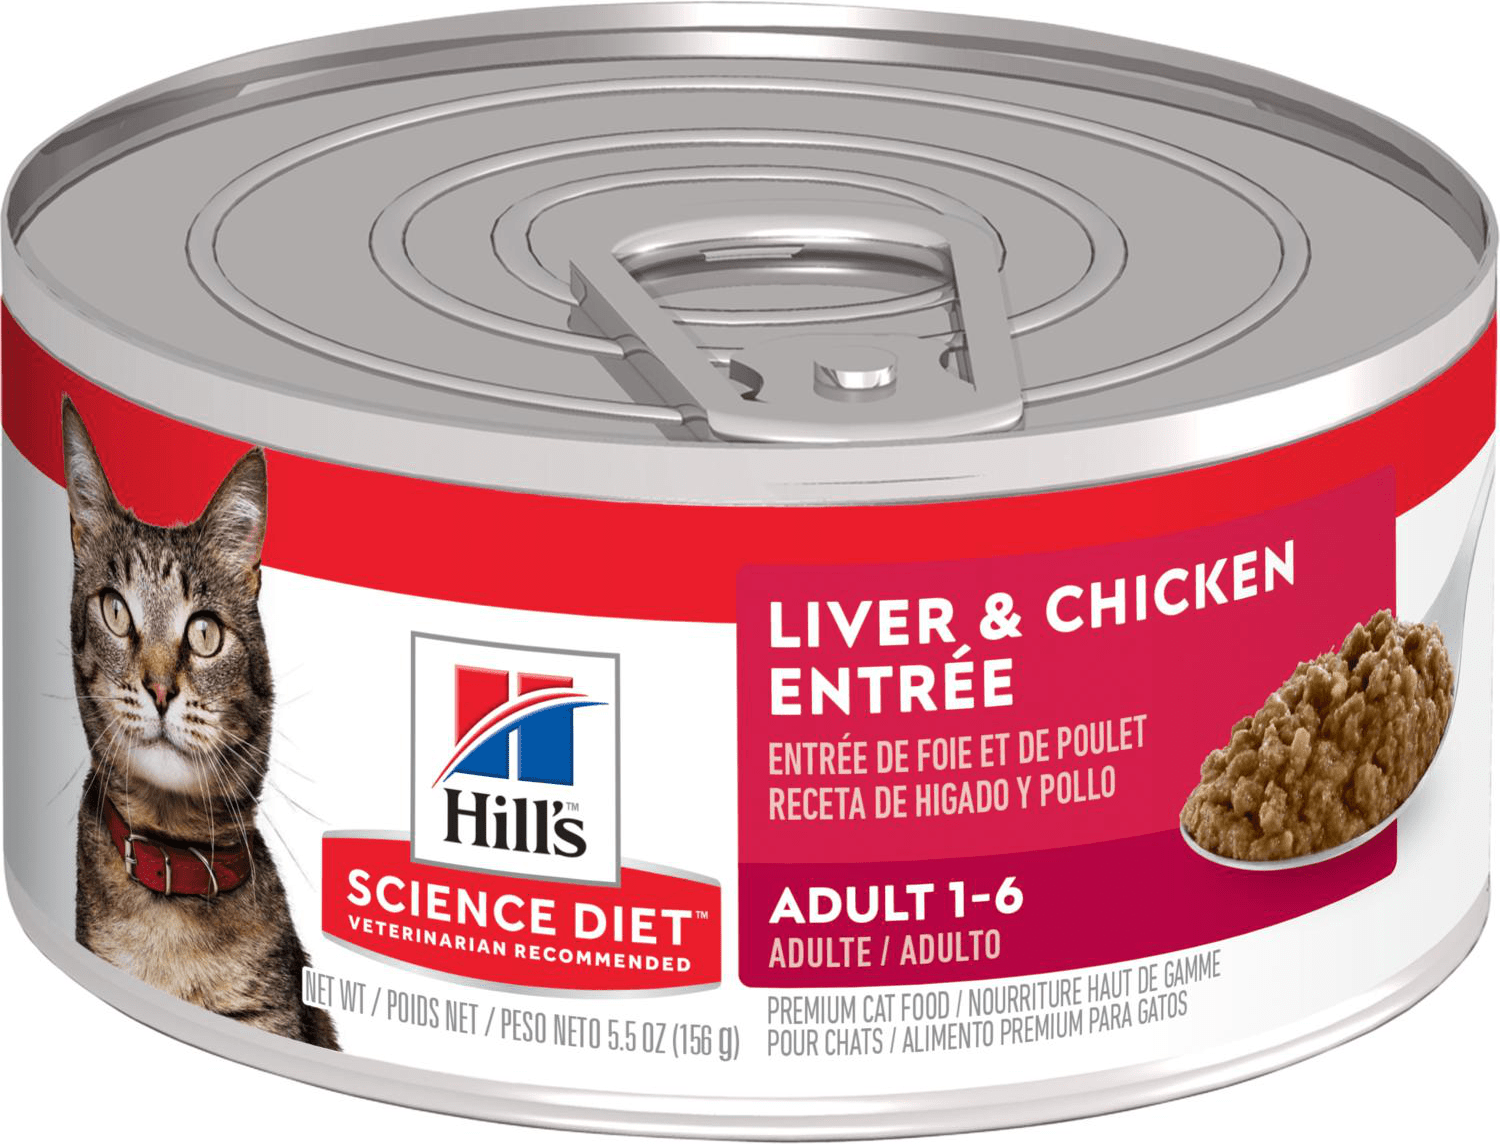 Hill's Science Diet Adult Liver & Chicken Entrée